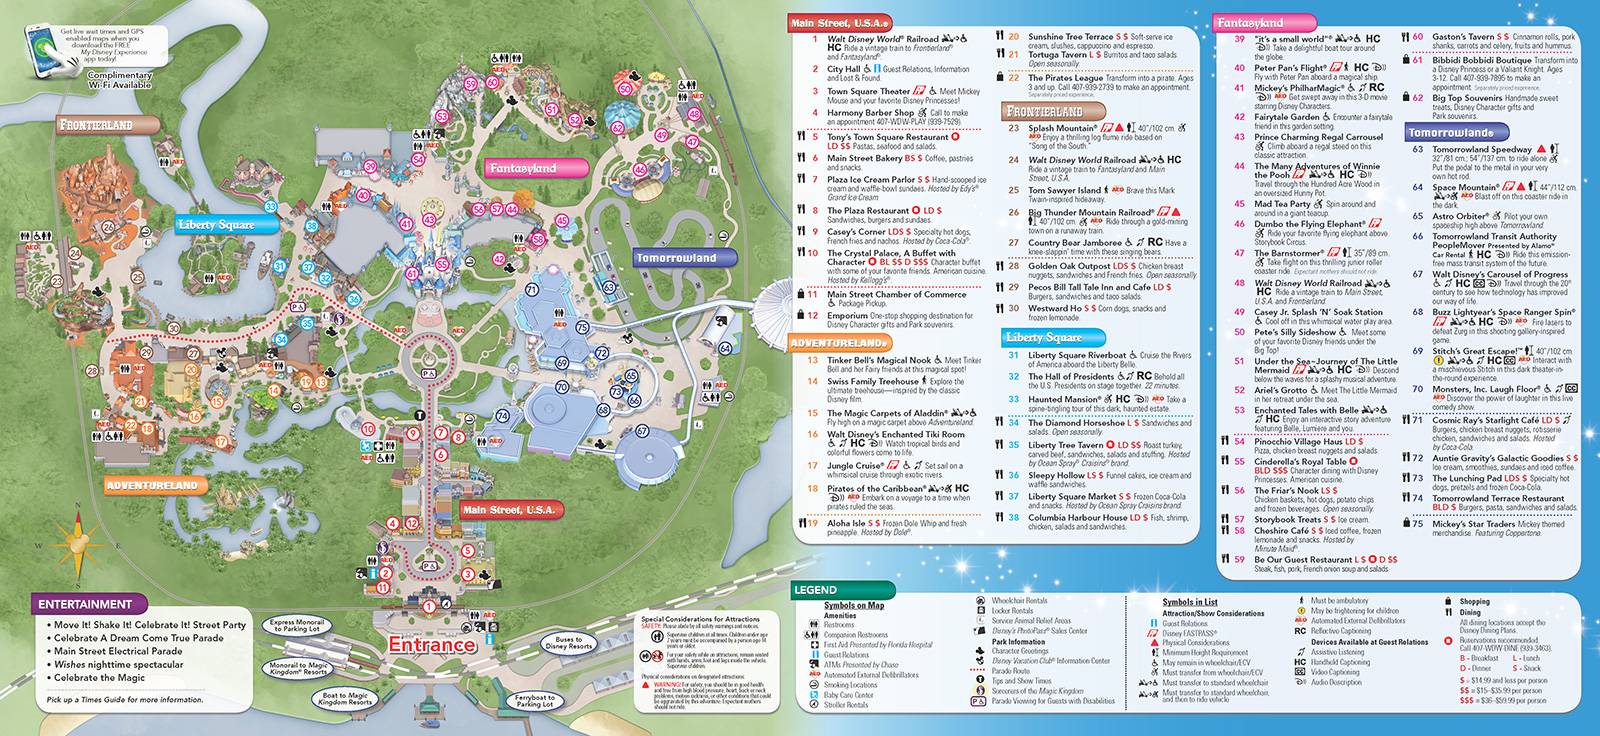 New 2013 Magic Kingdom Guidemap Page 2